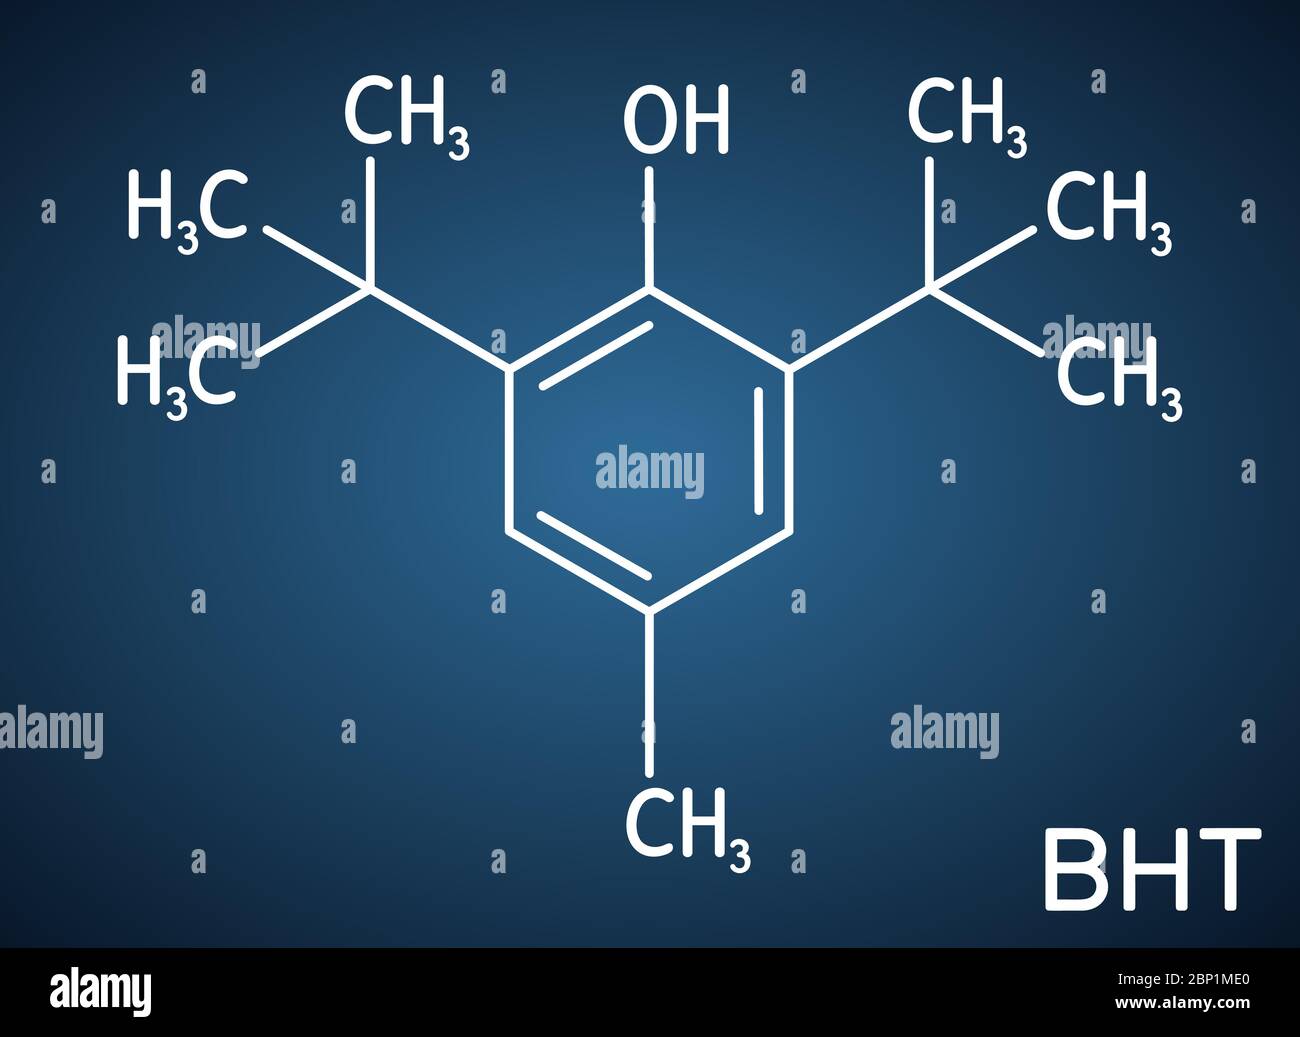 Butyliertes Hydroxytoluol, BHT, Dibutylhydroxytoluol-Molekül. Es ist  lipophile organische Verbindung, Antioxidans, Lebensmittelzusatzstoff E321.  Strukturchemische Stoffe Stock-Vektorgrafik - Alamy